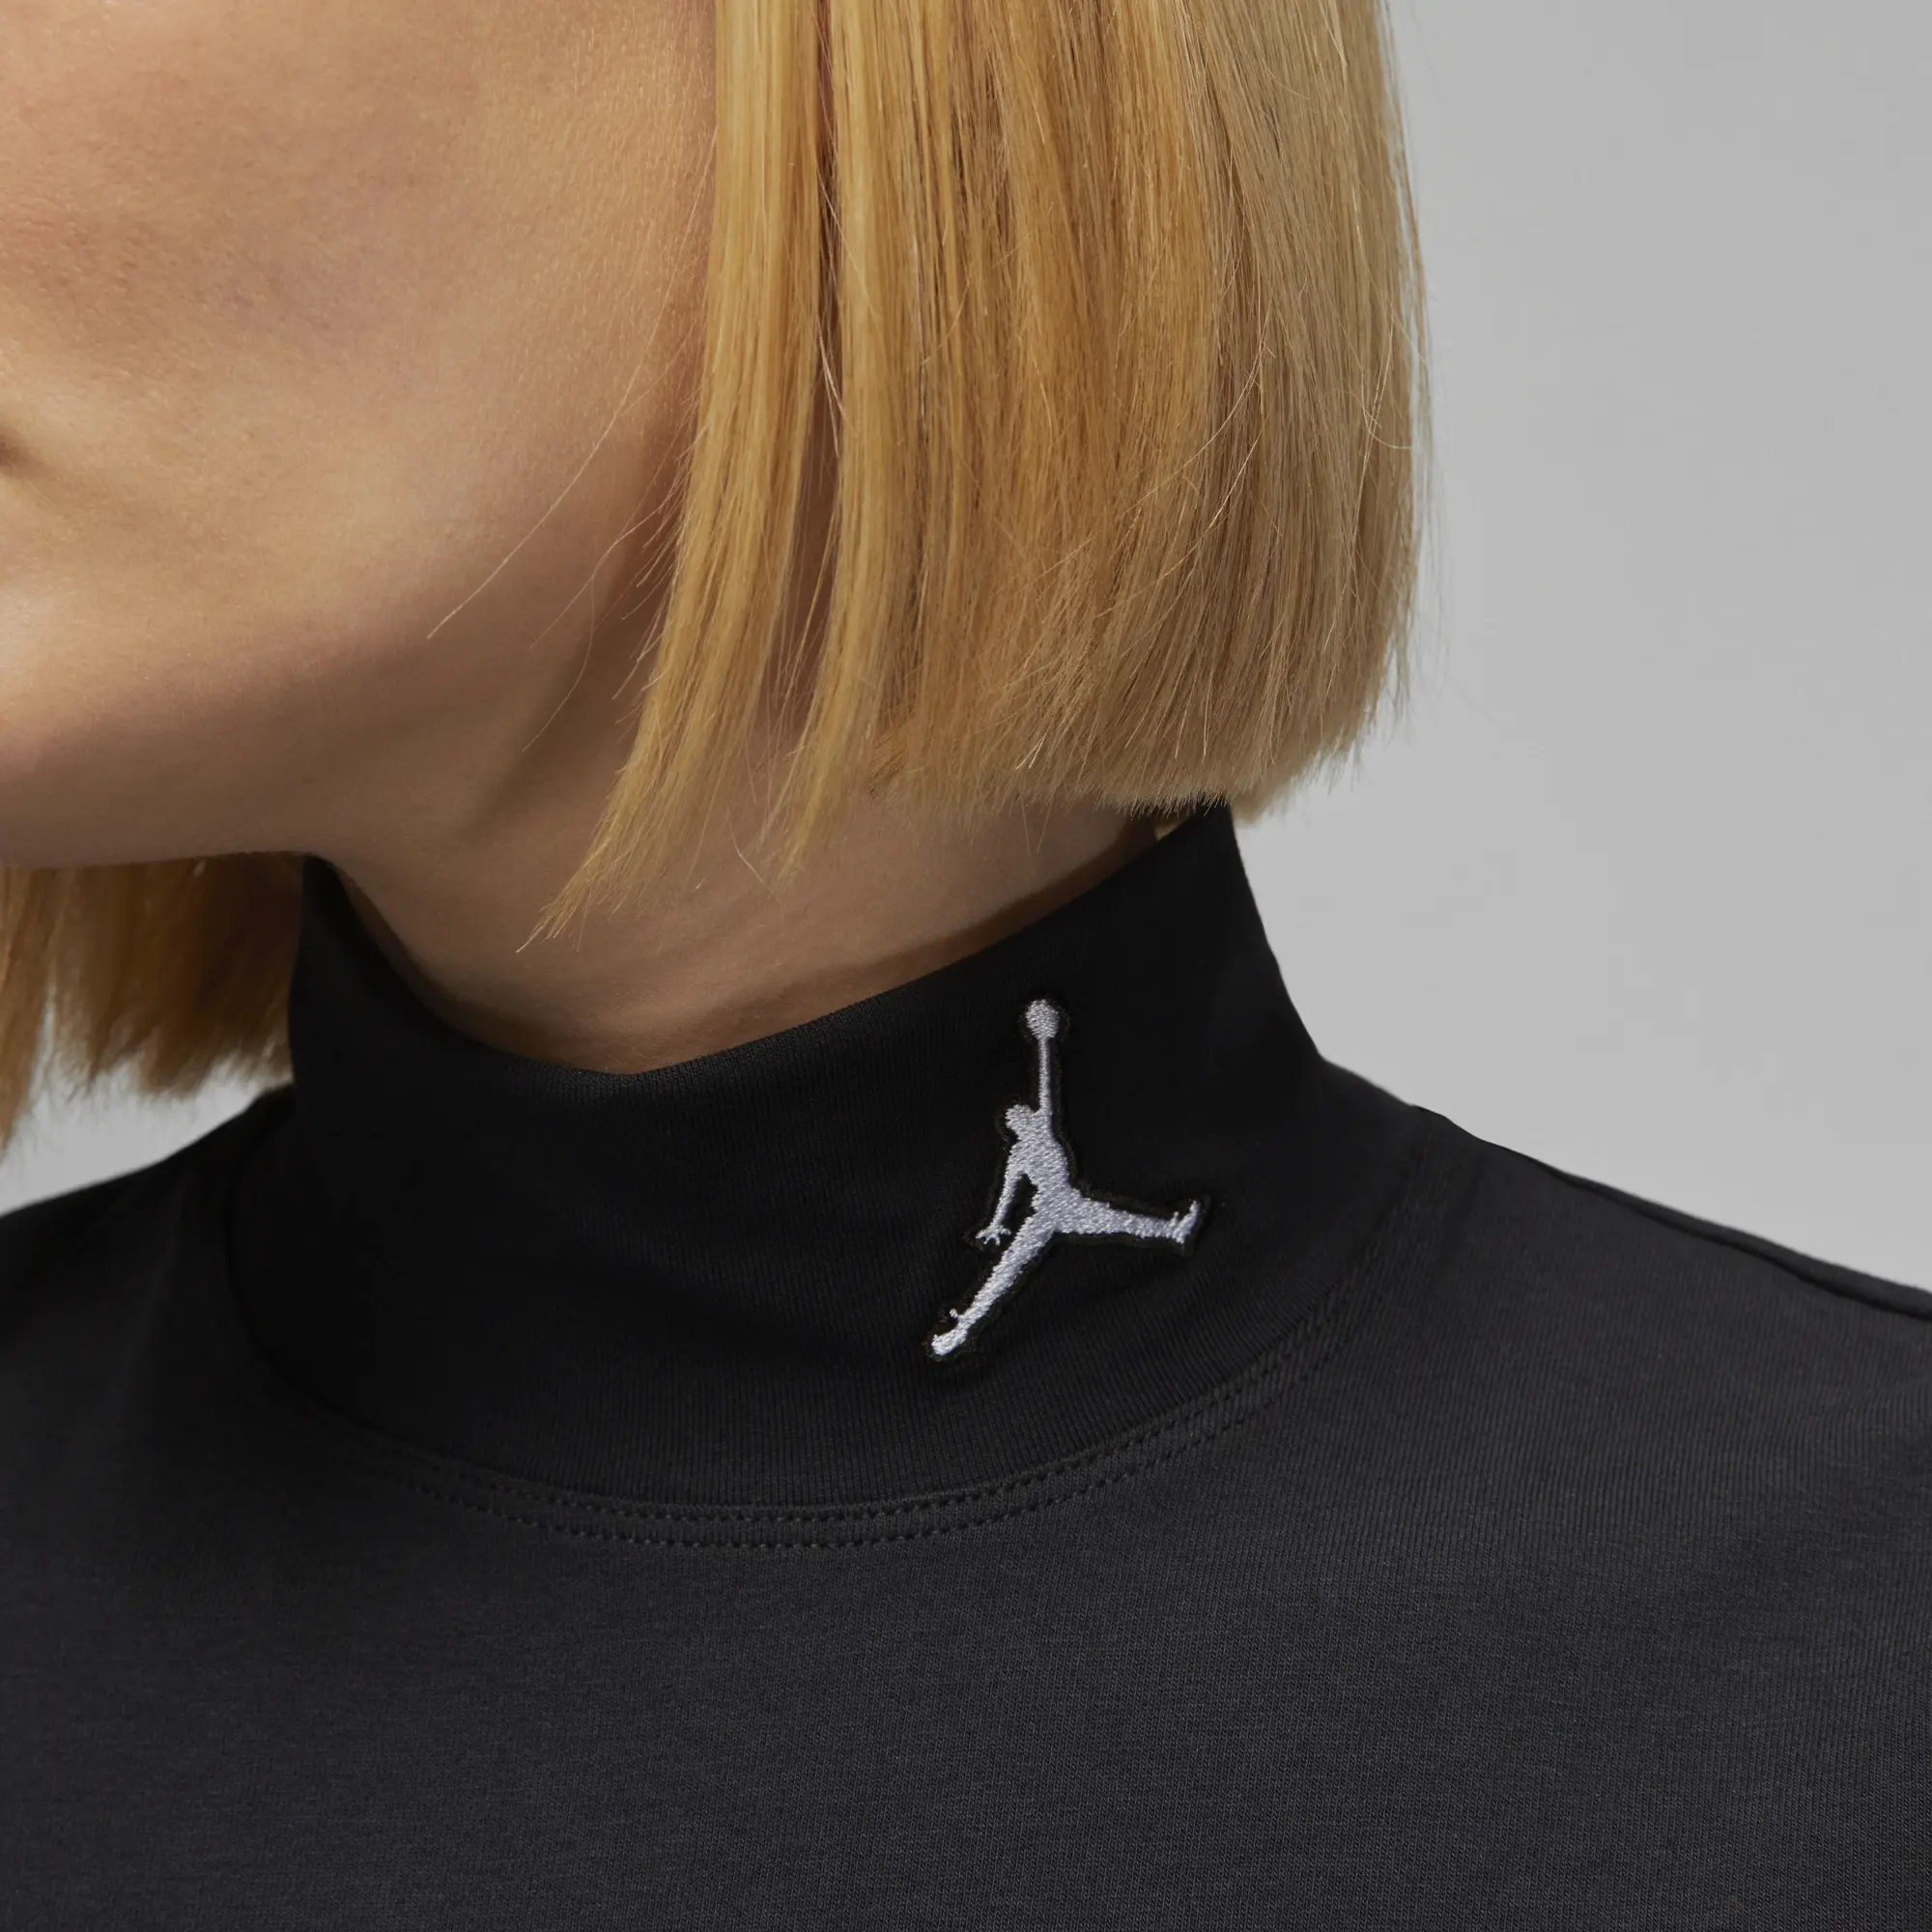 Nike Jordan Flight Women's Mock Neck Long-Sleeve Top - Black